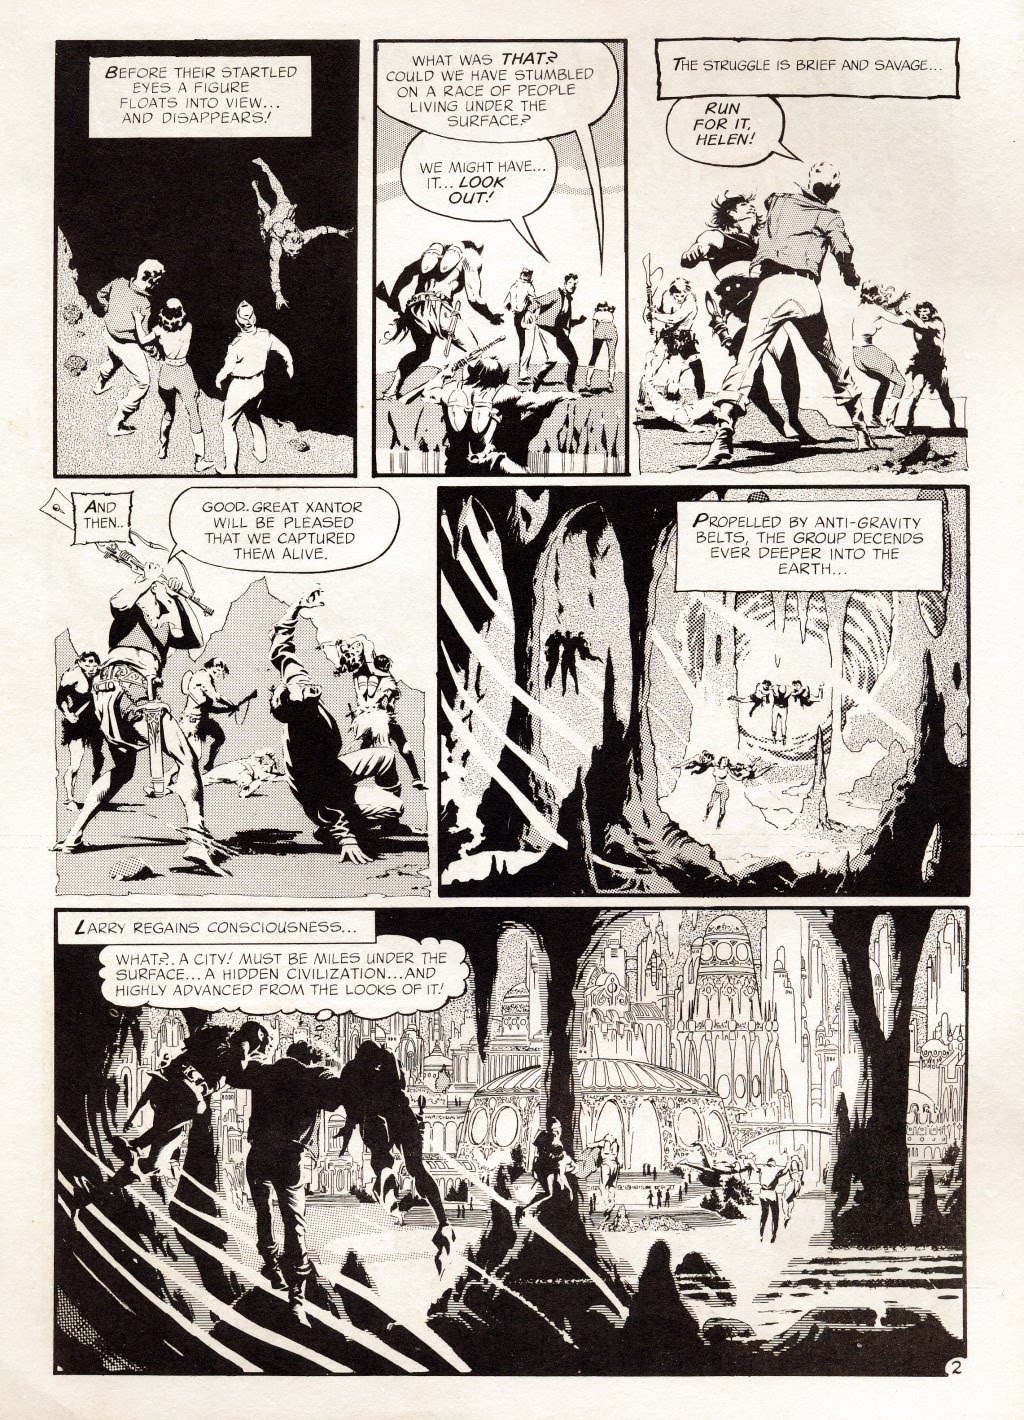 Cap'n's Comics: Sci-Fi from the 1950s